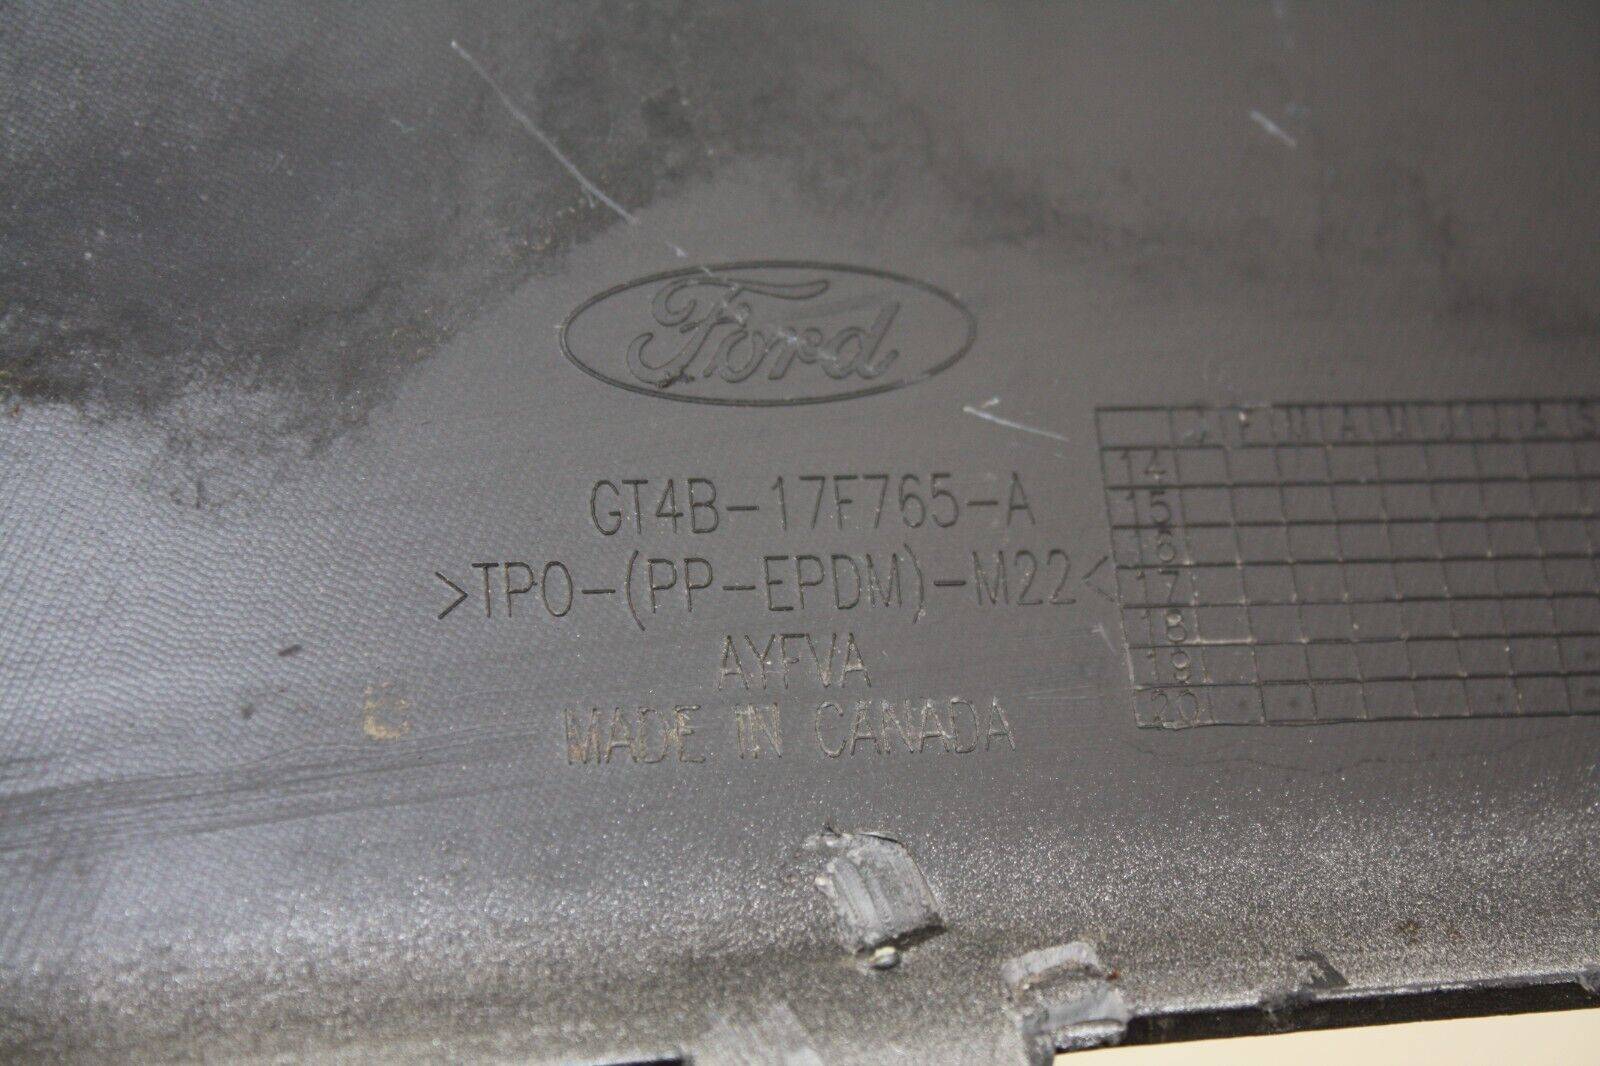 Ford-Edge-Rear-Bumper-Diffuser-GT4B-17F765-A-Genuine-175718492628-13